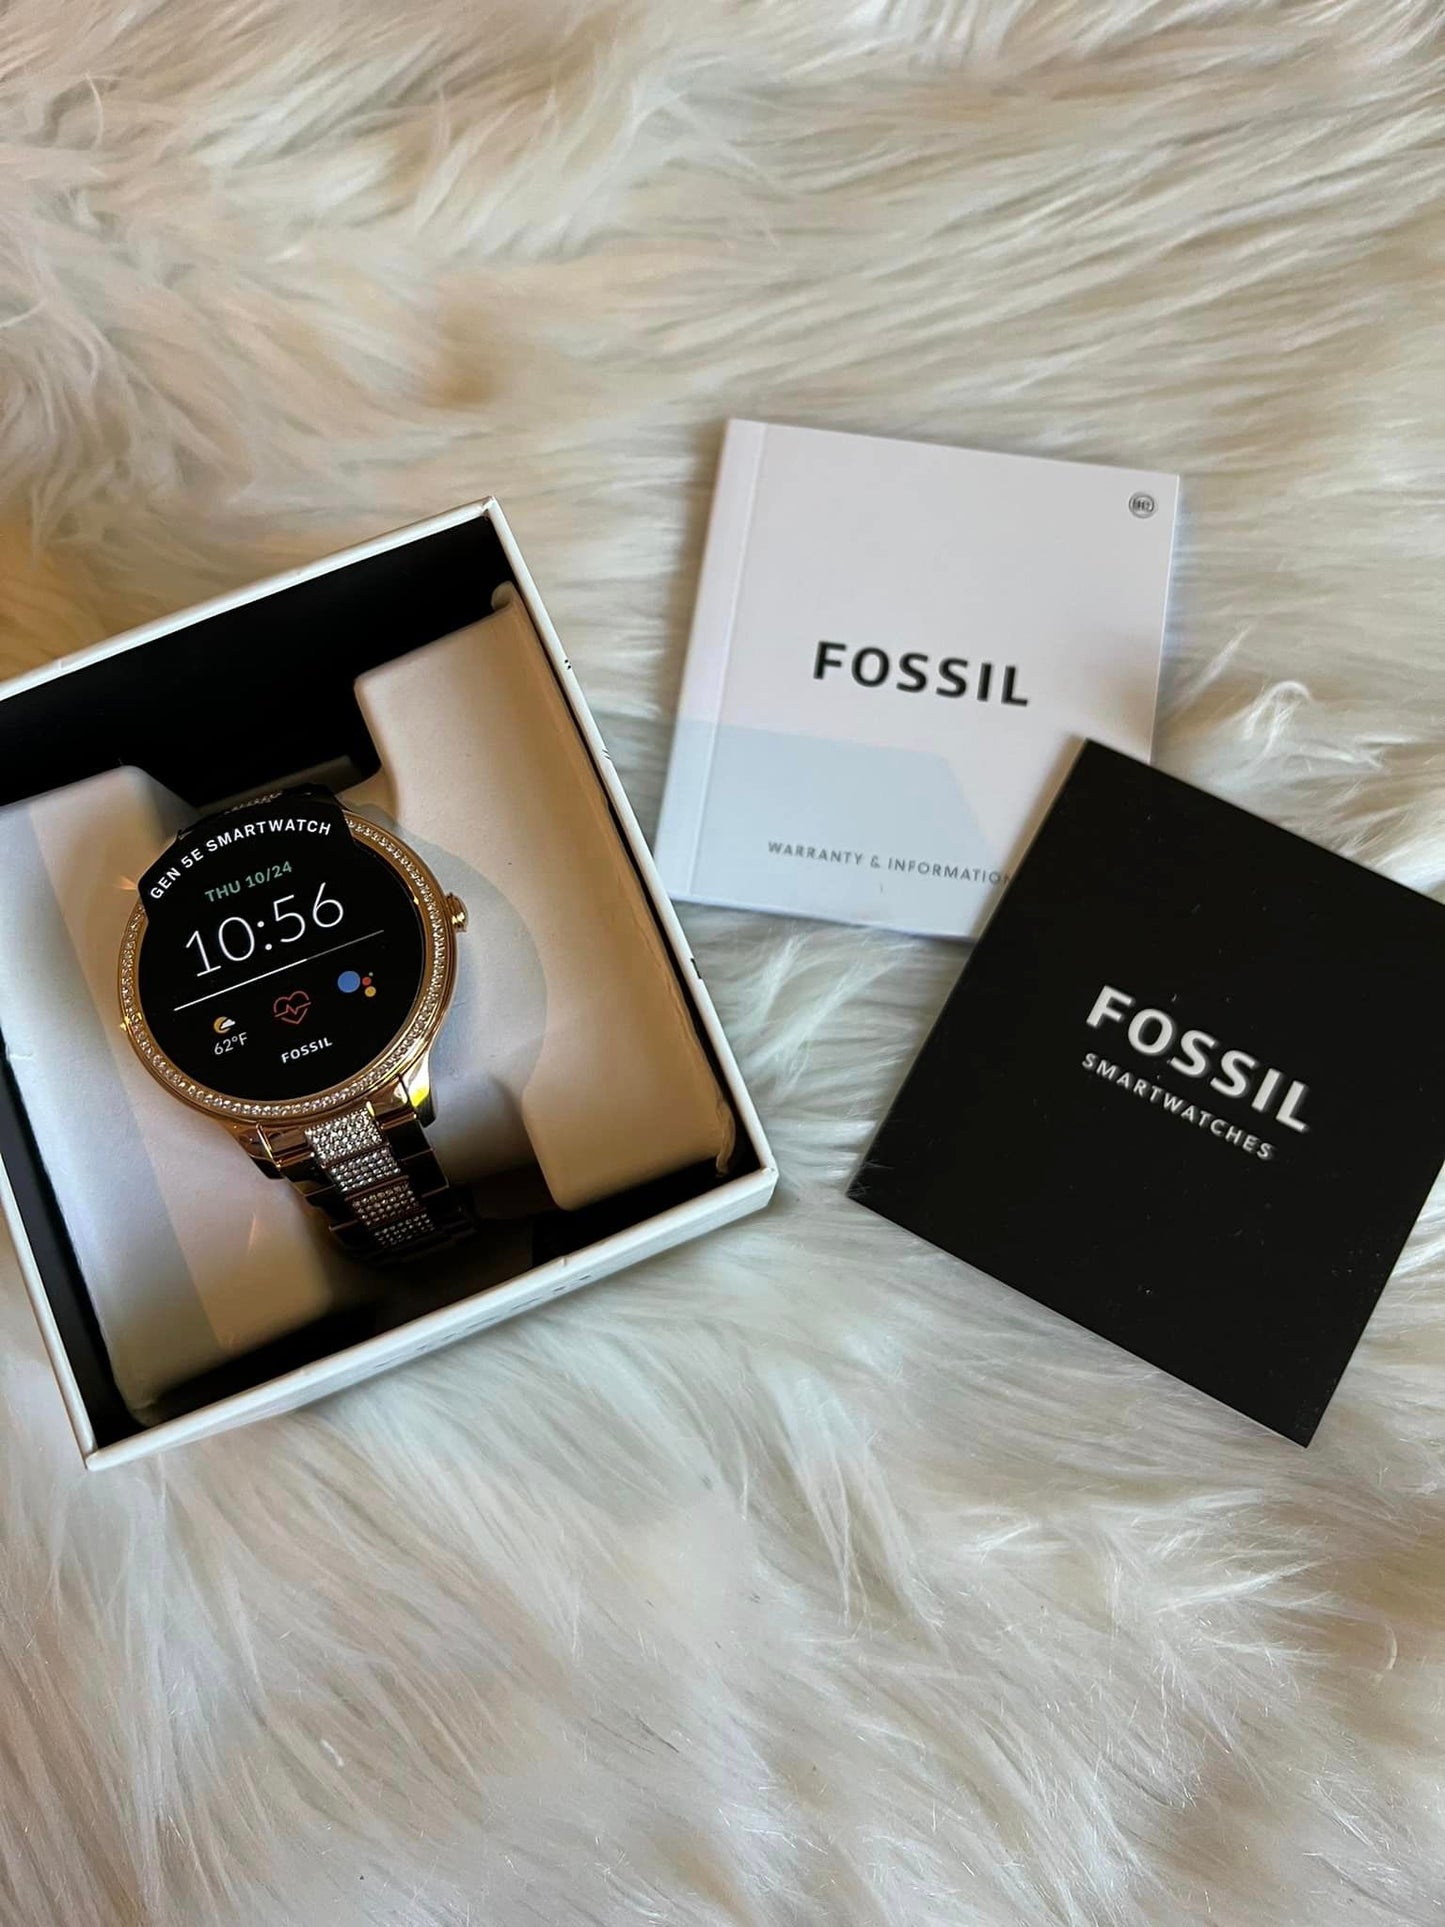 Fossil Women’s Gen 5E Smartwatch Rose Gold-Tone Stainless Steel